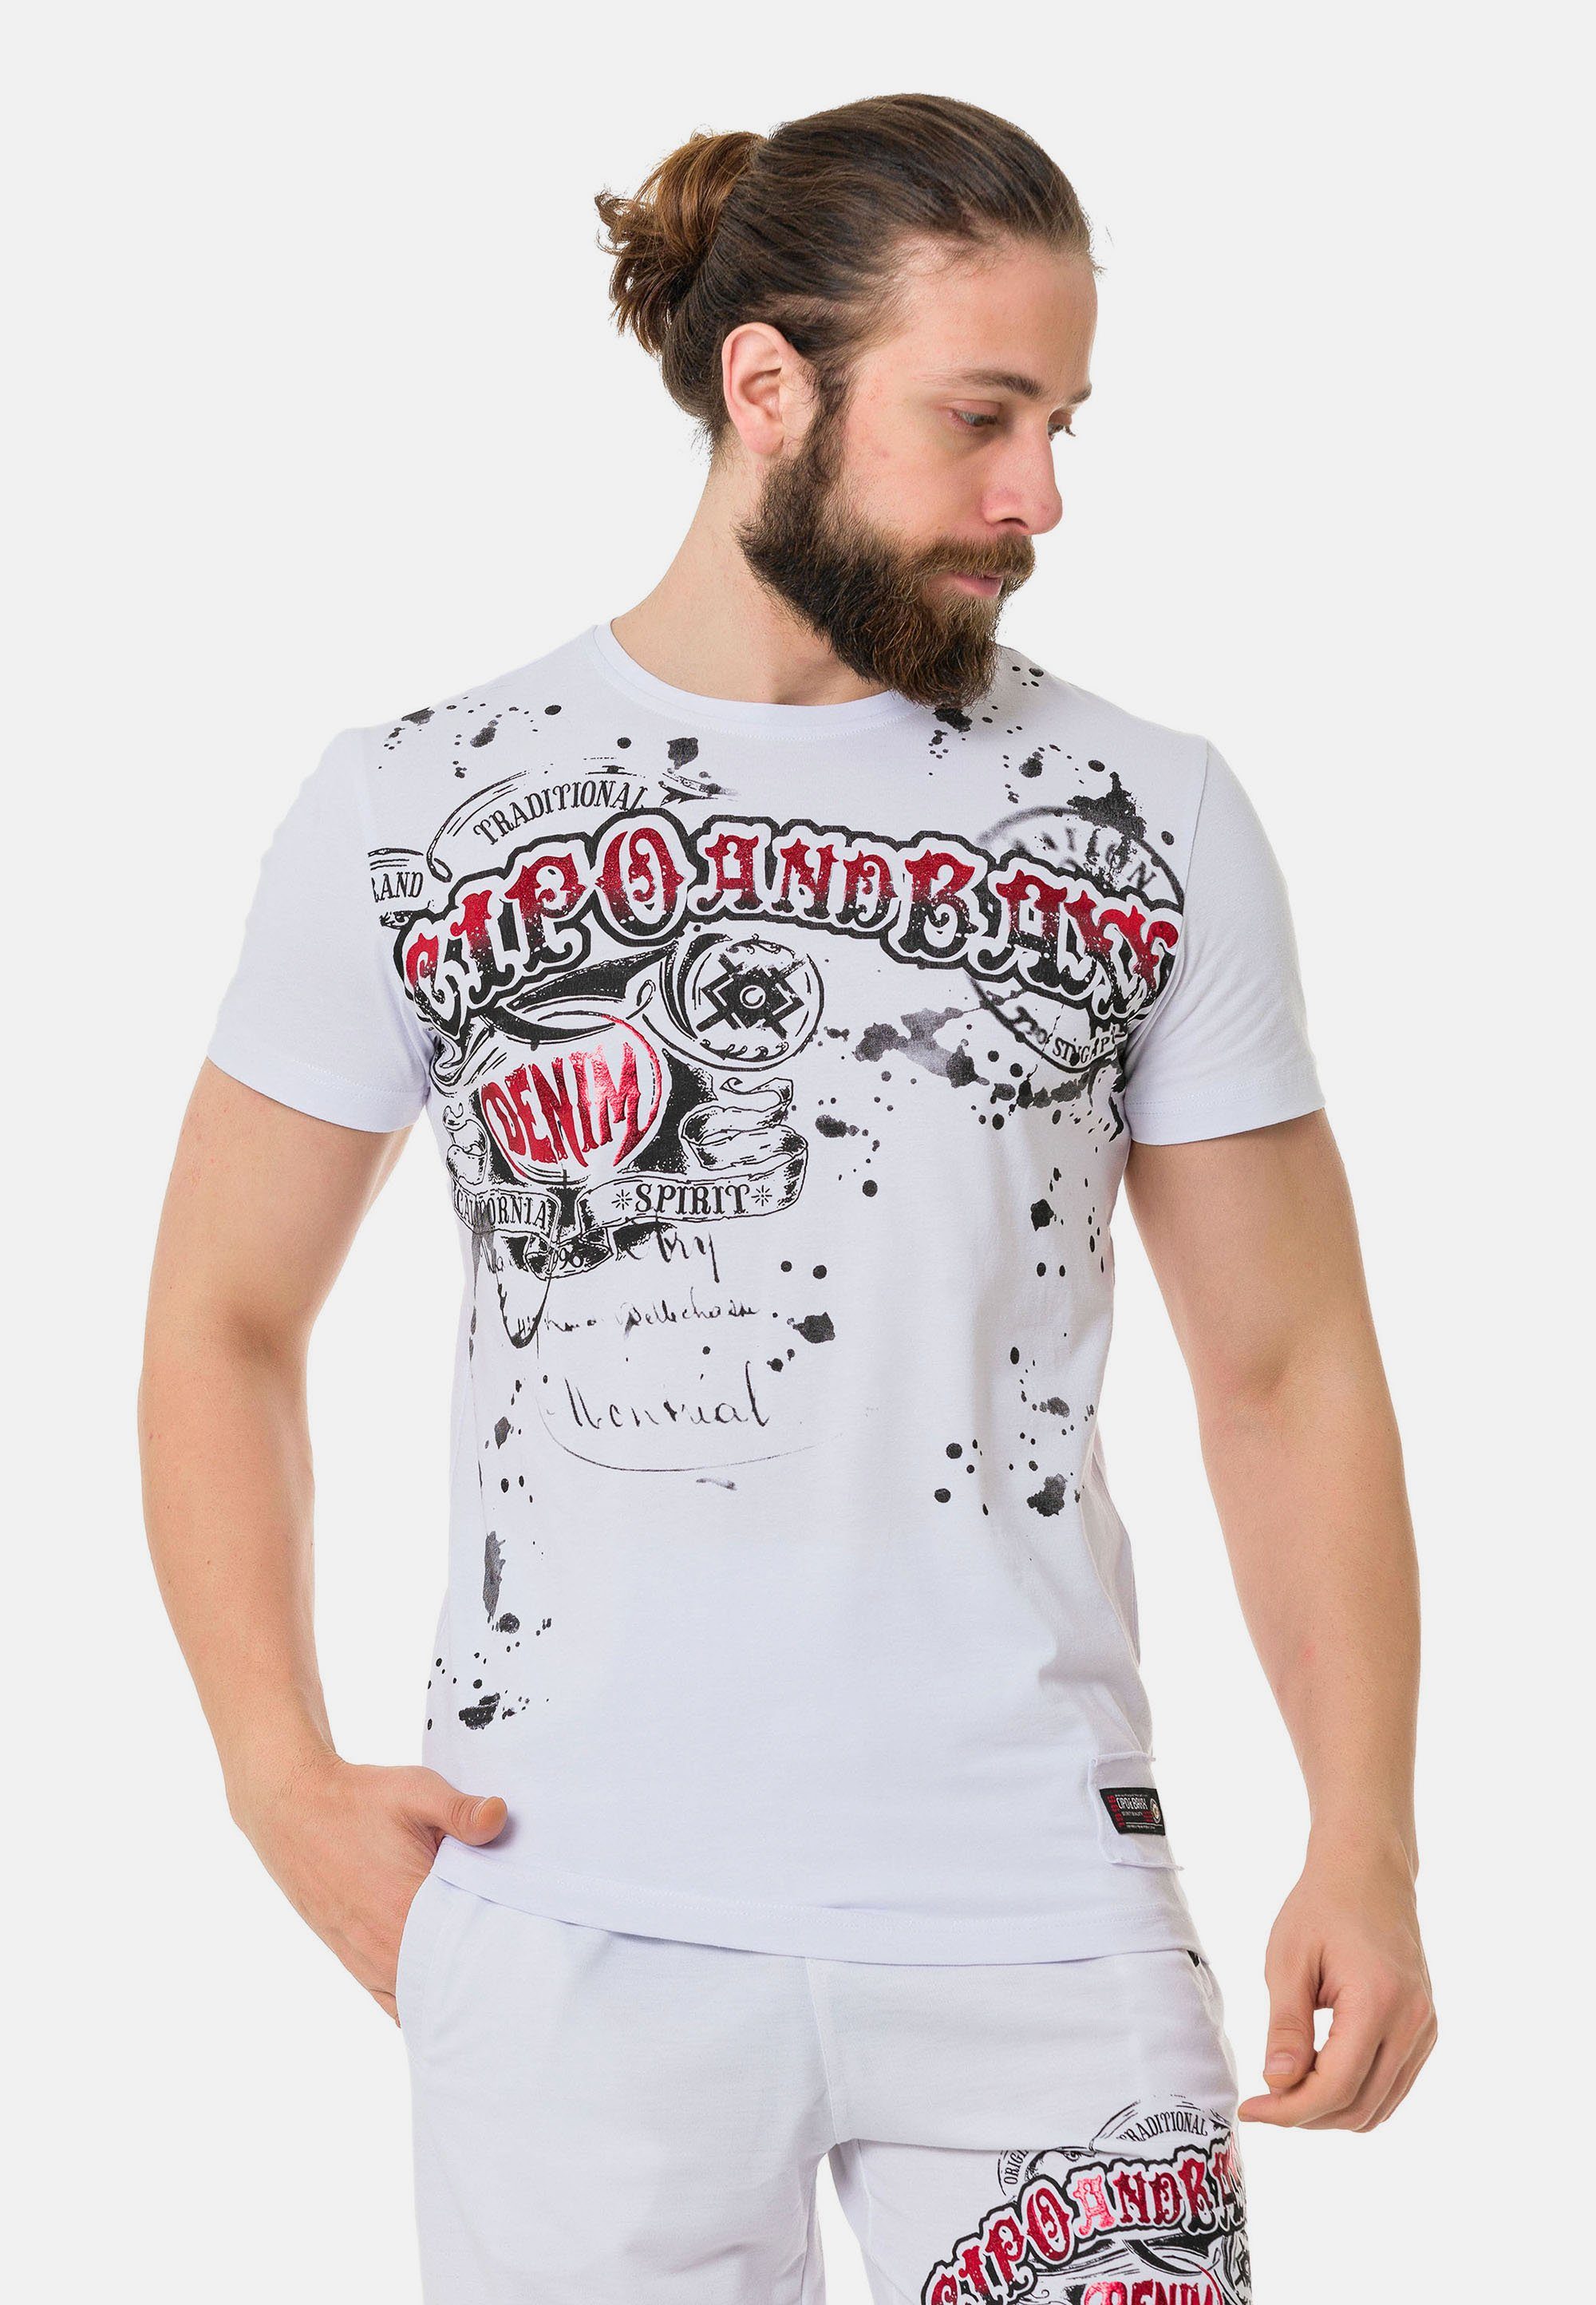 Baxx mit Cipo T-Shirt & weiß Markenprint coolem